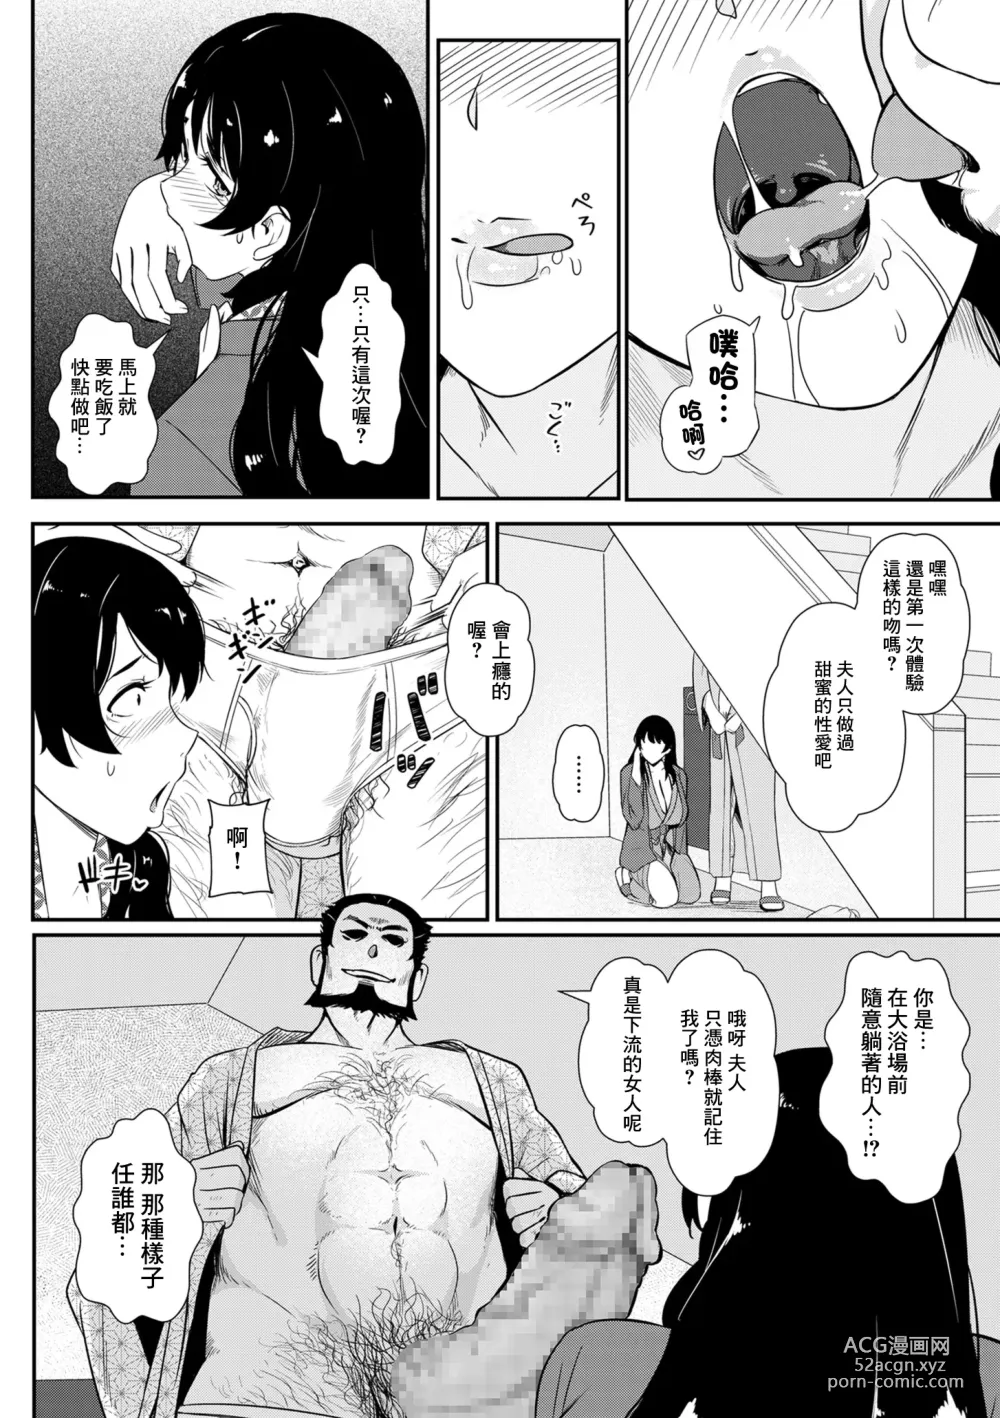 Page 8 of manga Haha wa Tabi no Owari ni...